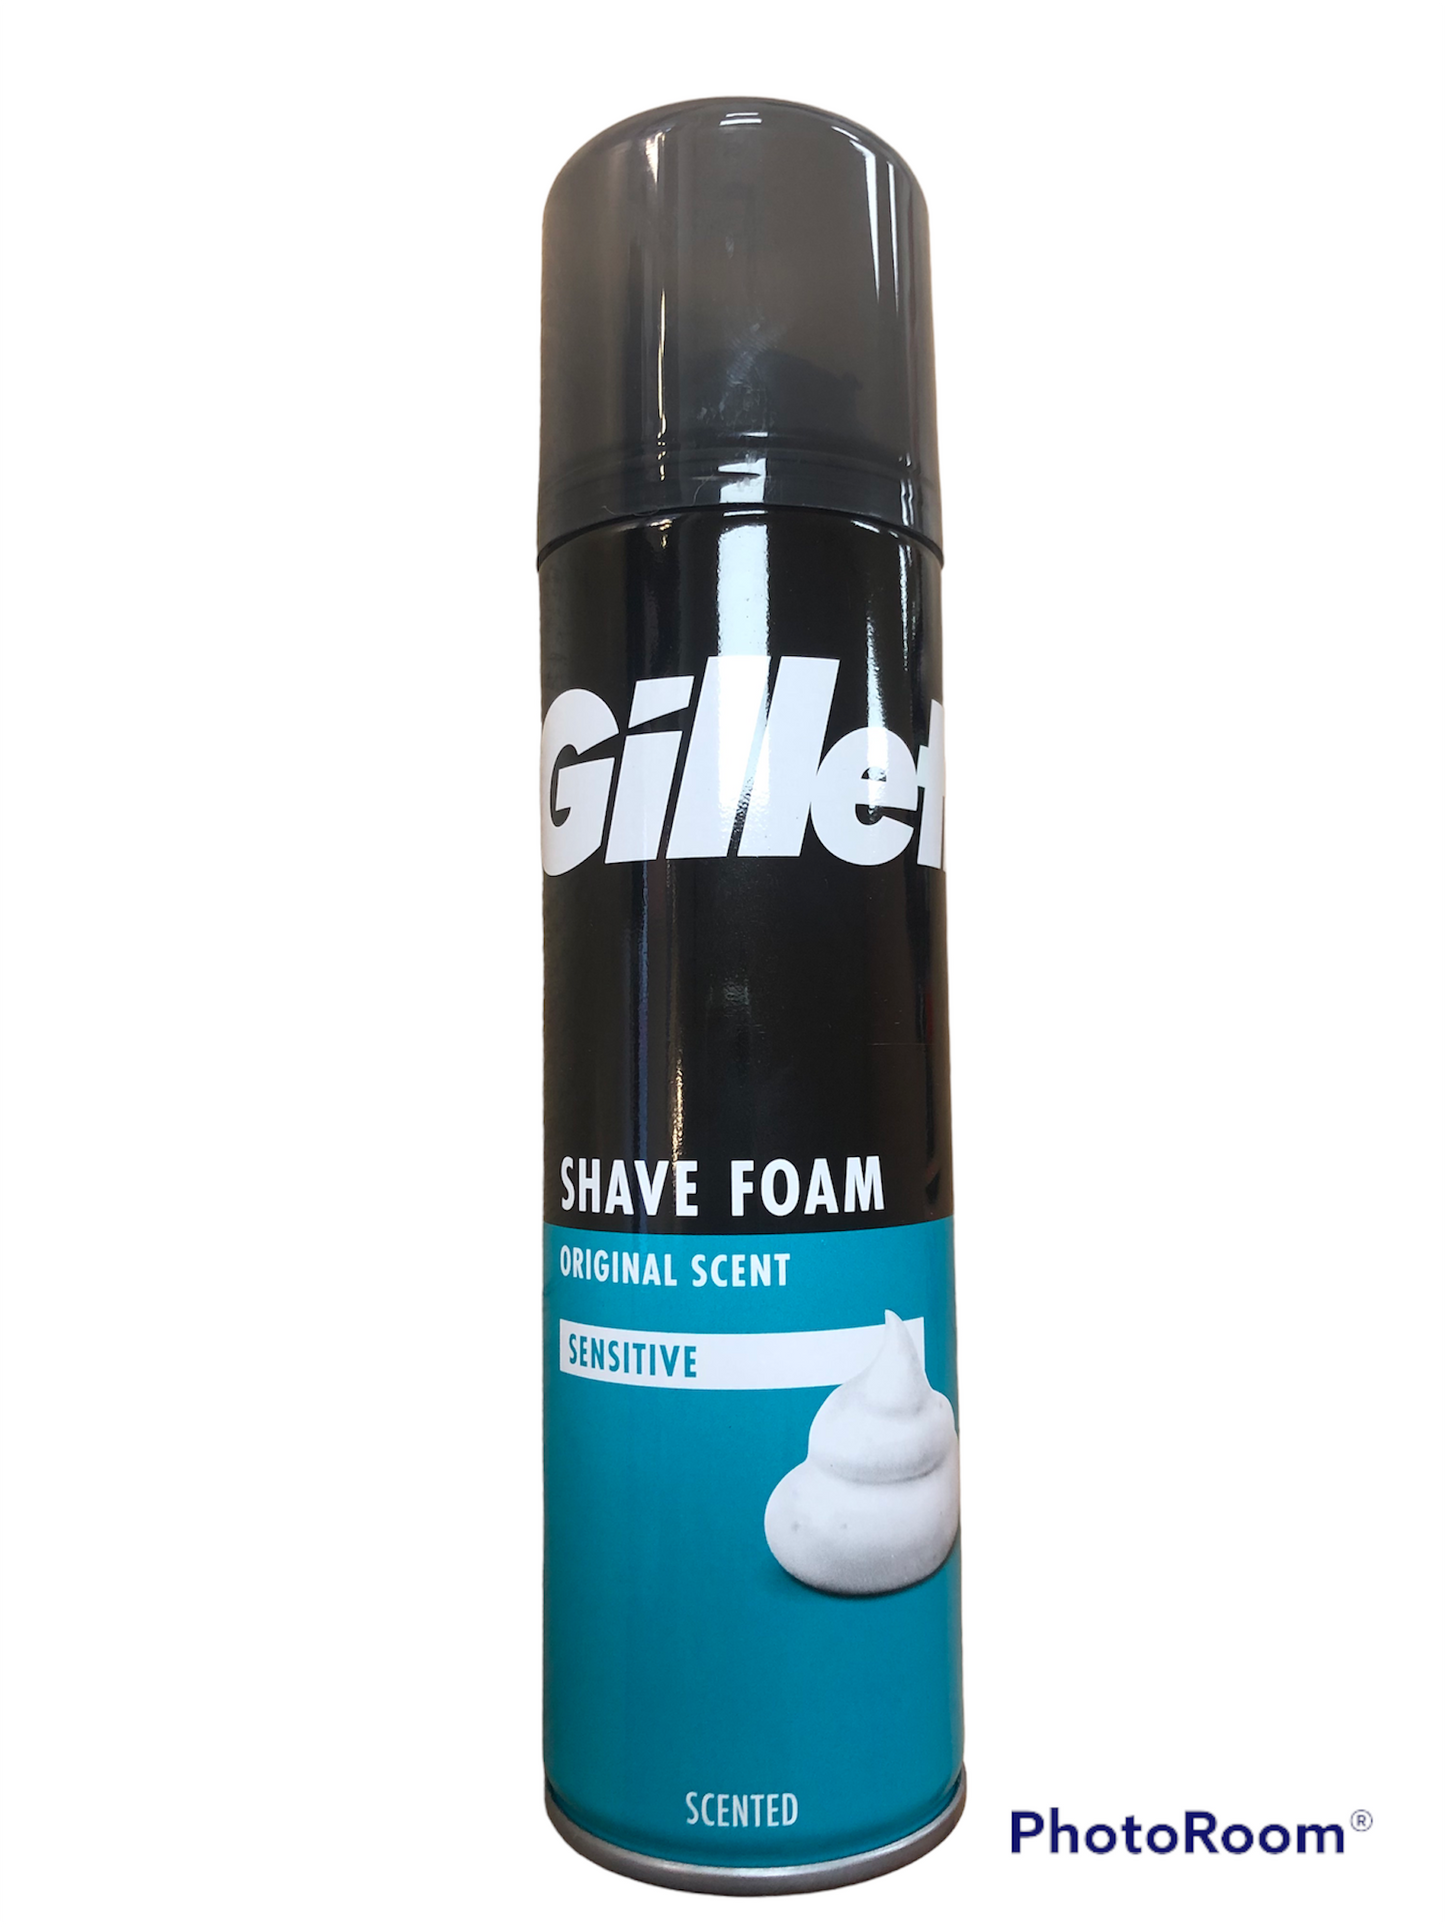 Gillette shave foam sensitive skin 200ml scented